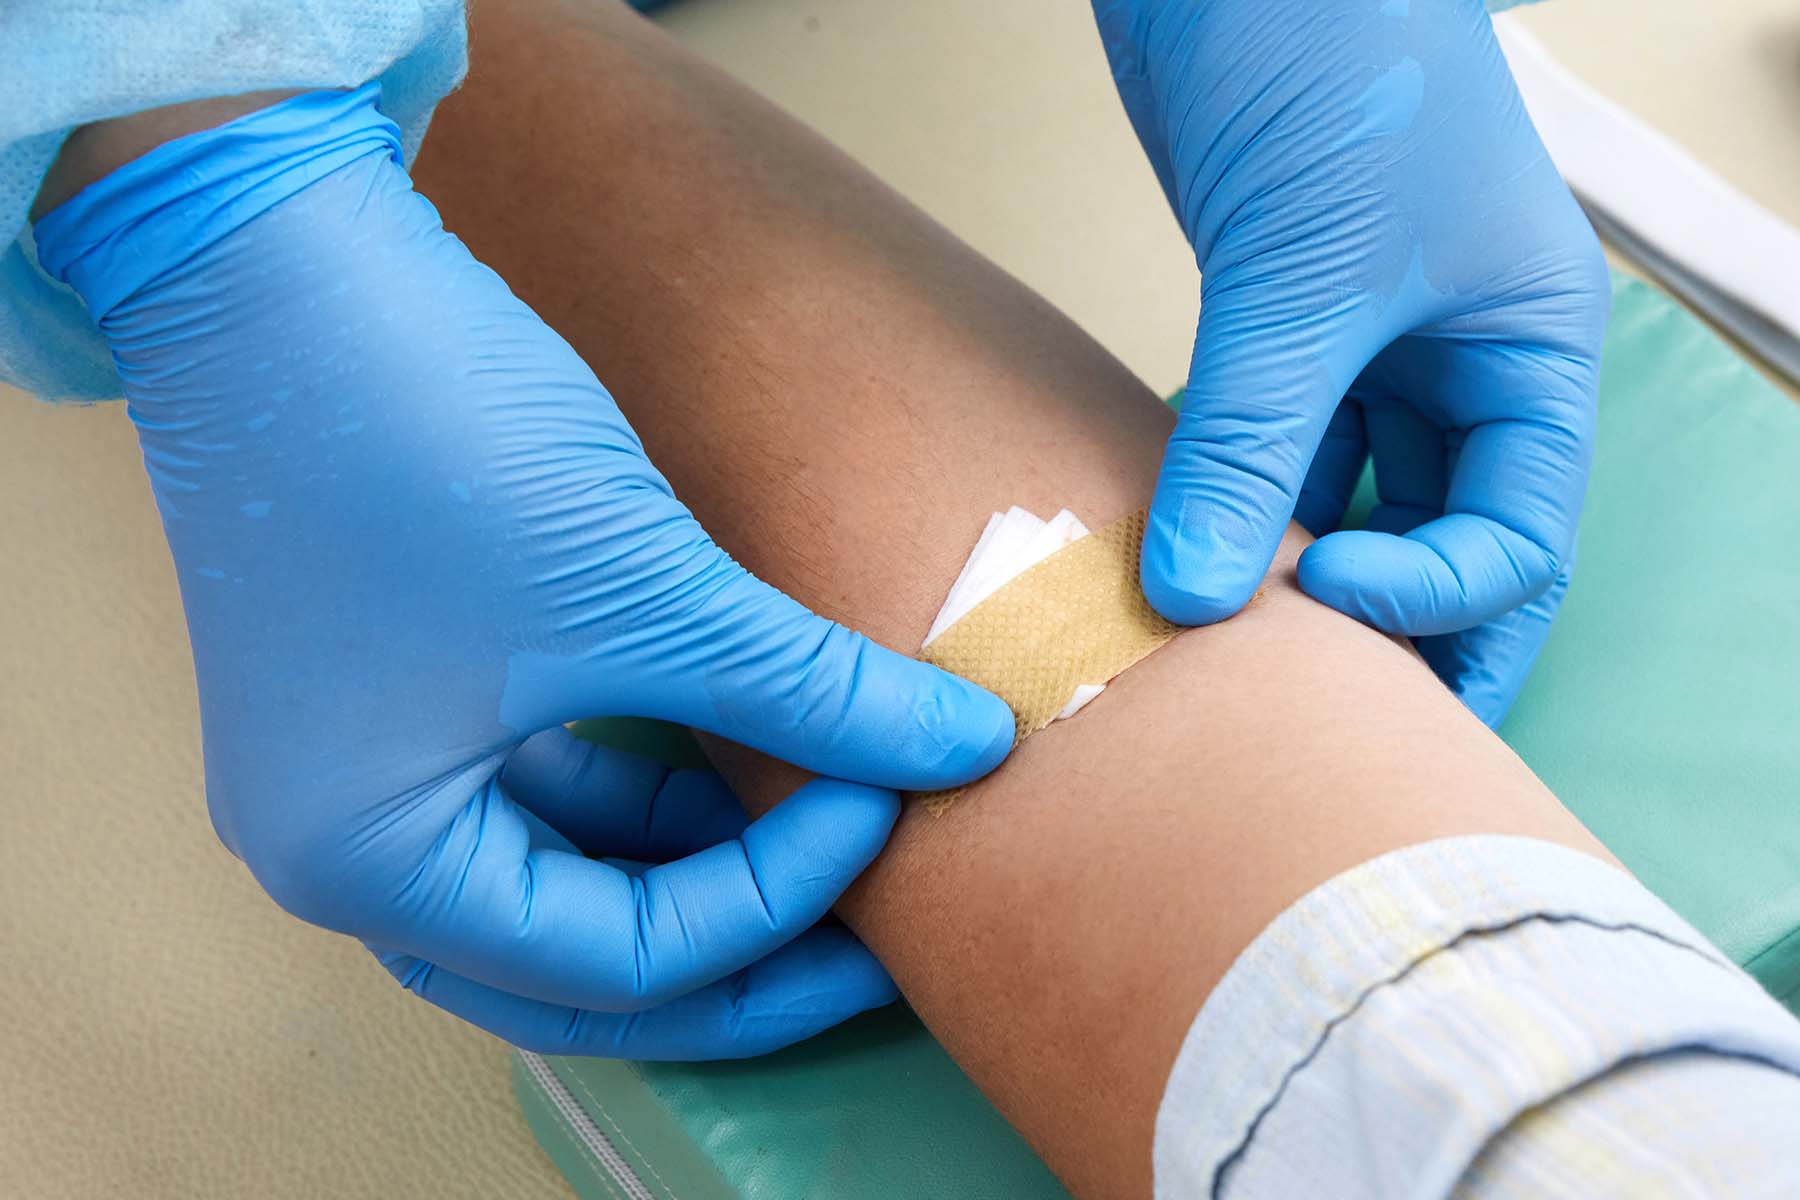 Nurse applies band aid after blood test